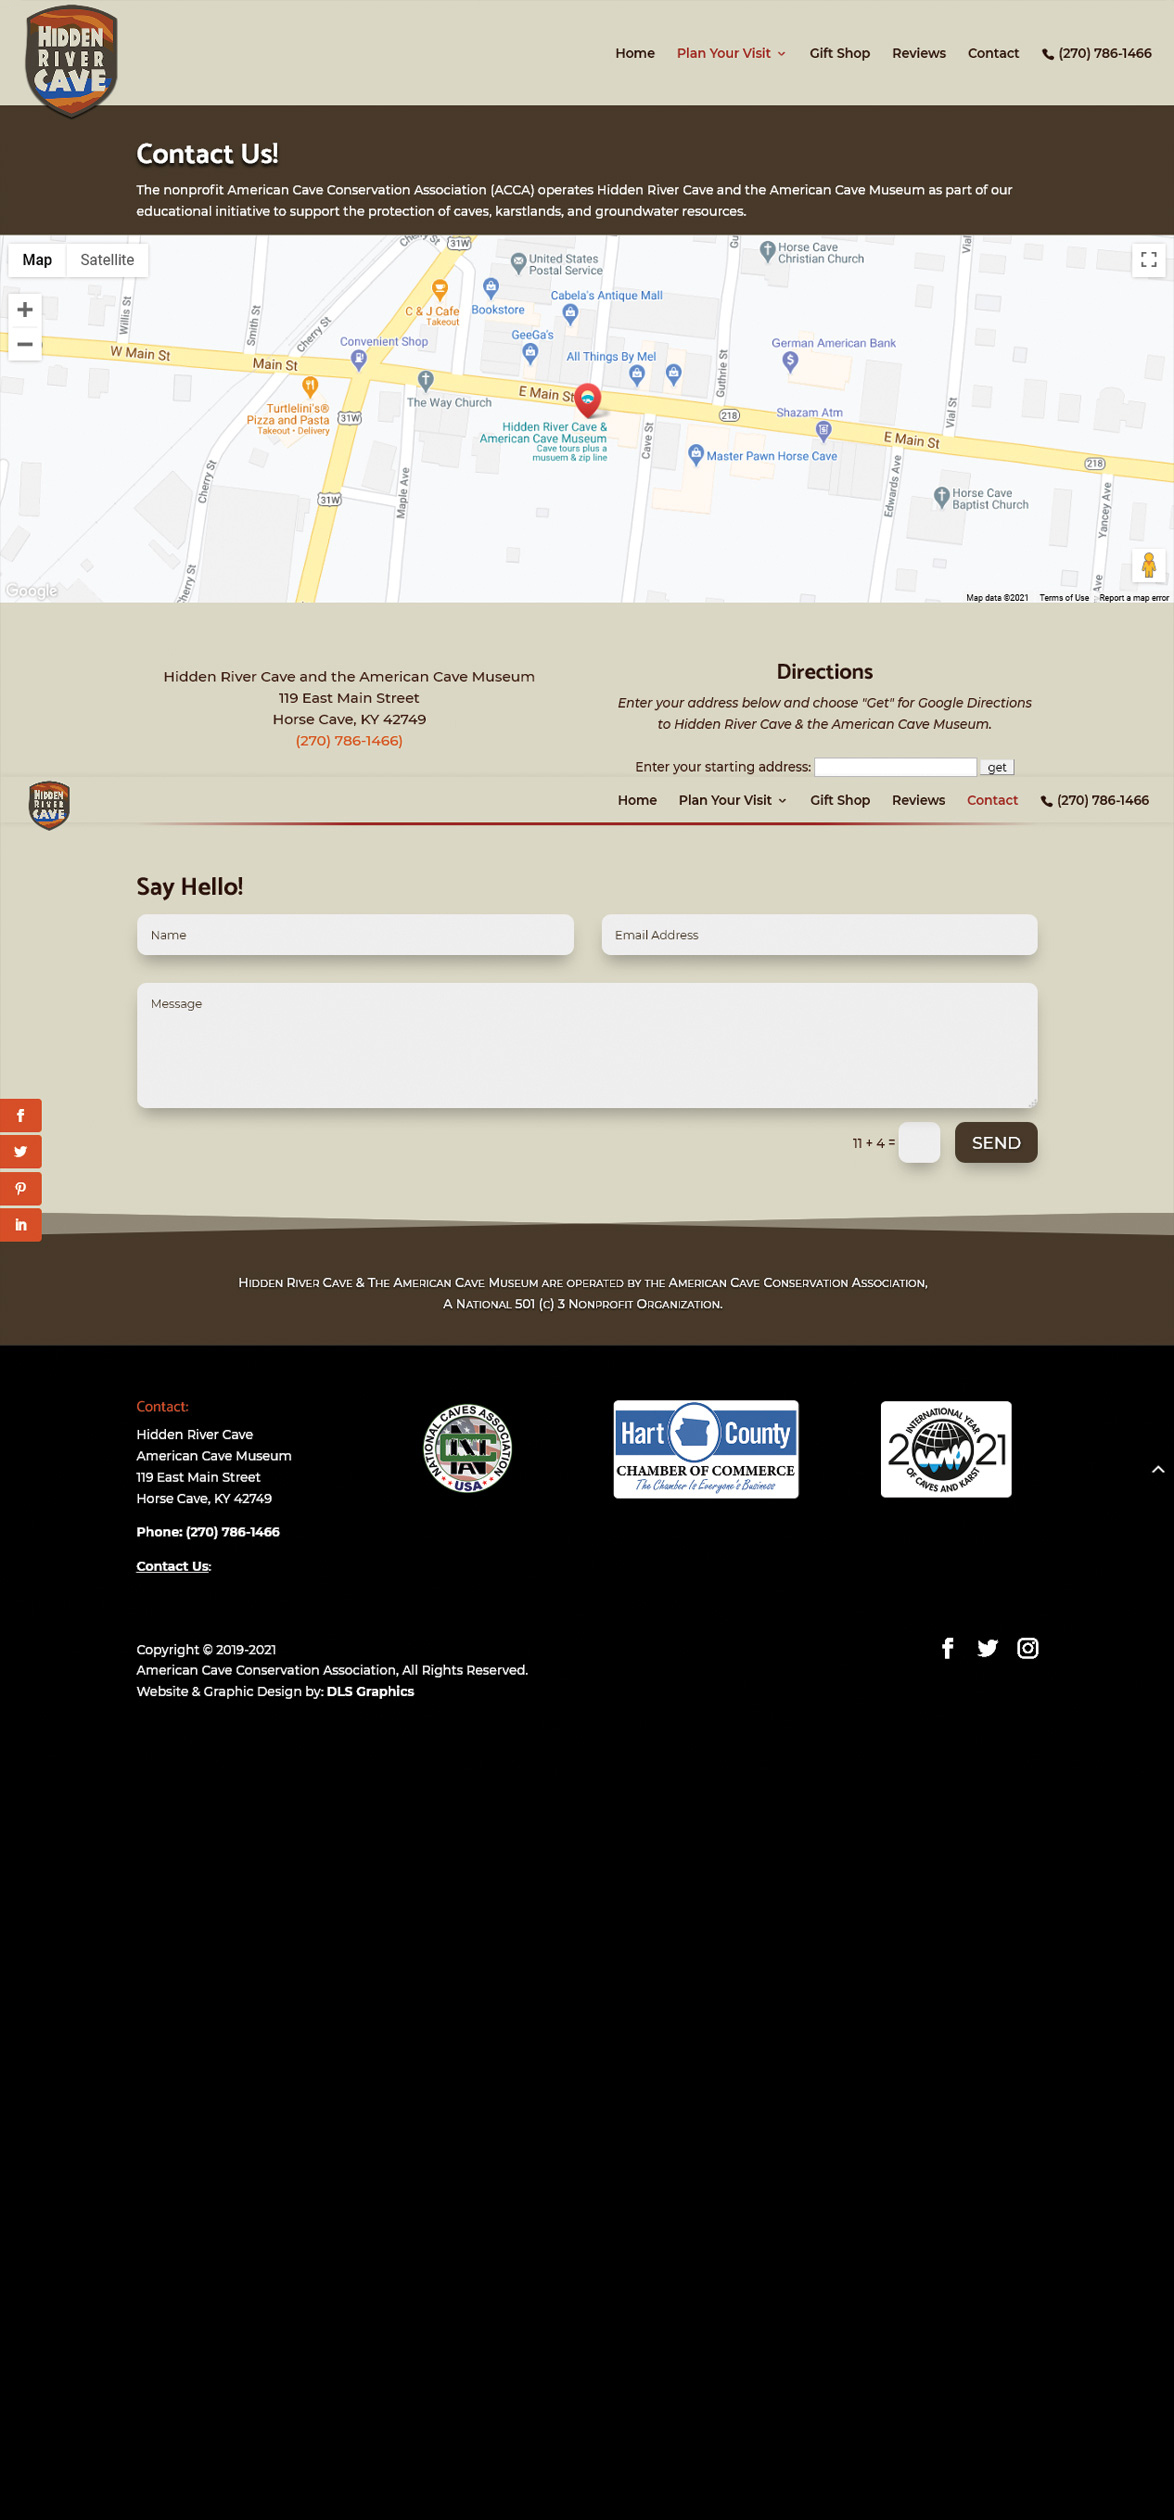 Hidden River Cave-Contact Information-Kentucky nonprofit website design